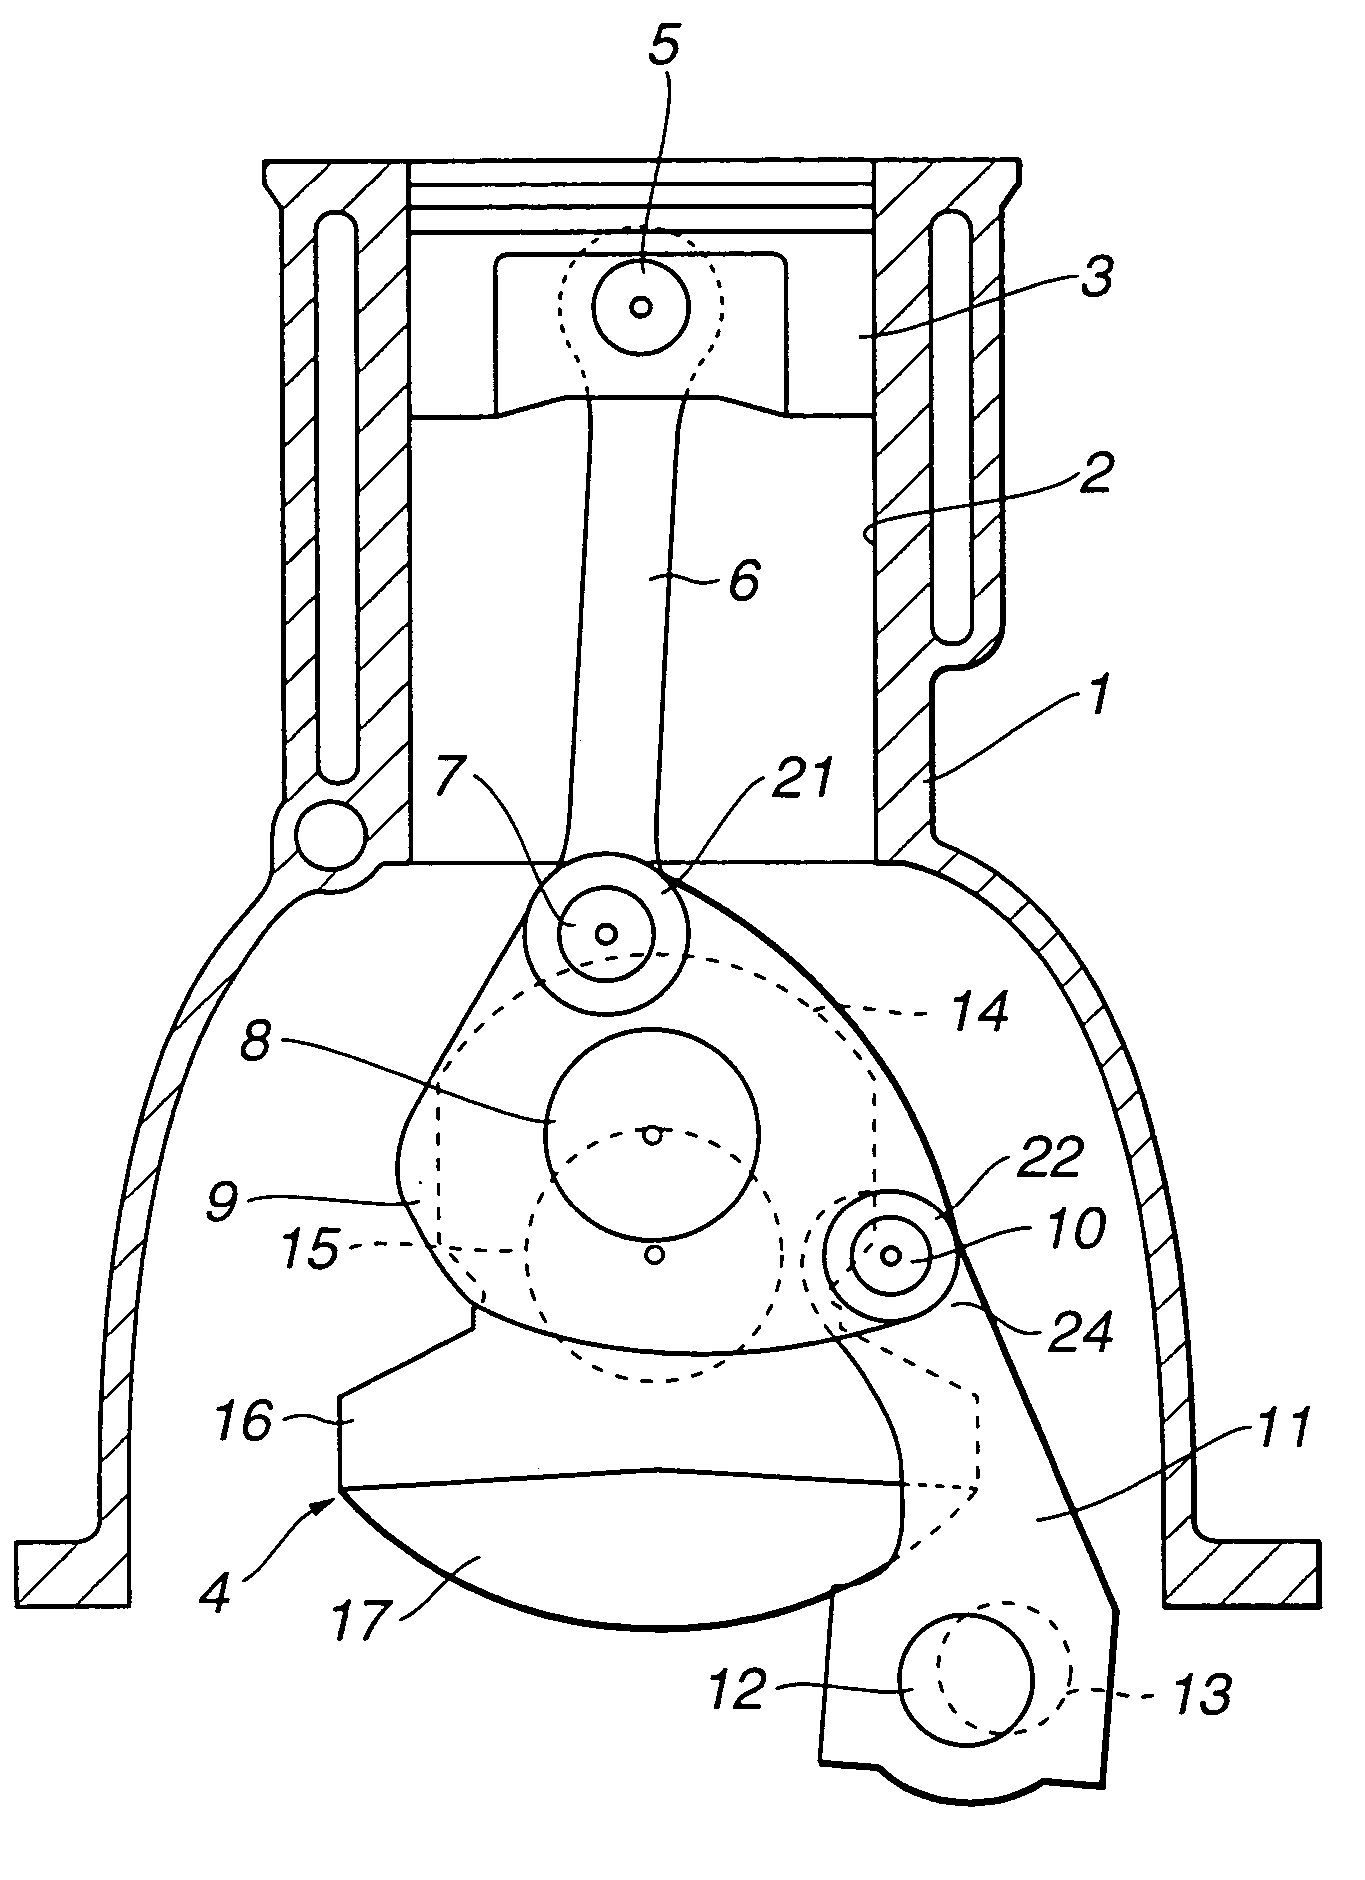 Multi-link piston crank mechanism for internal combustion engine